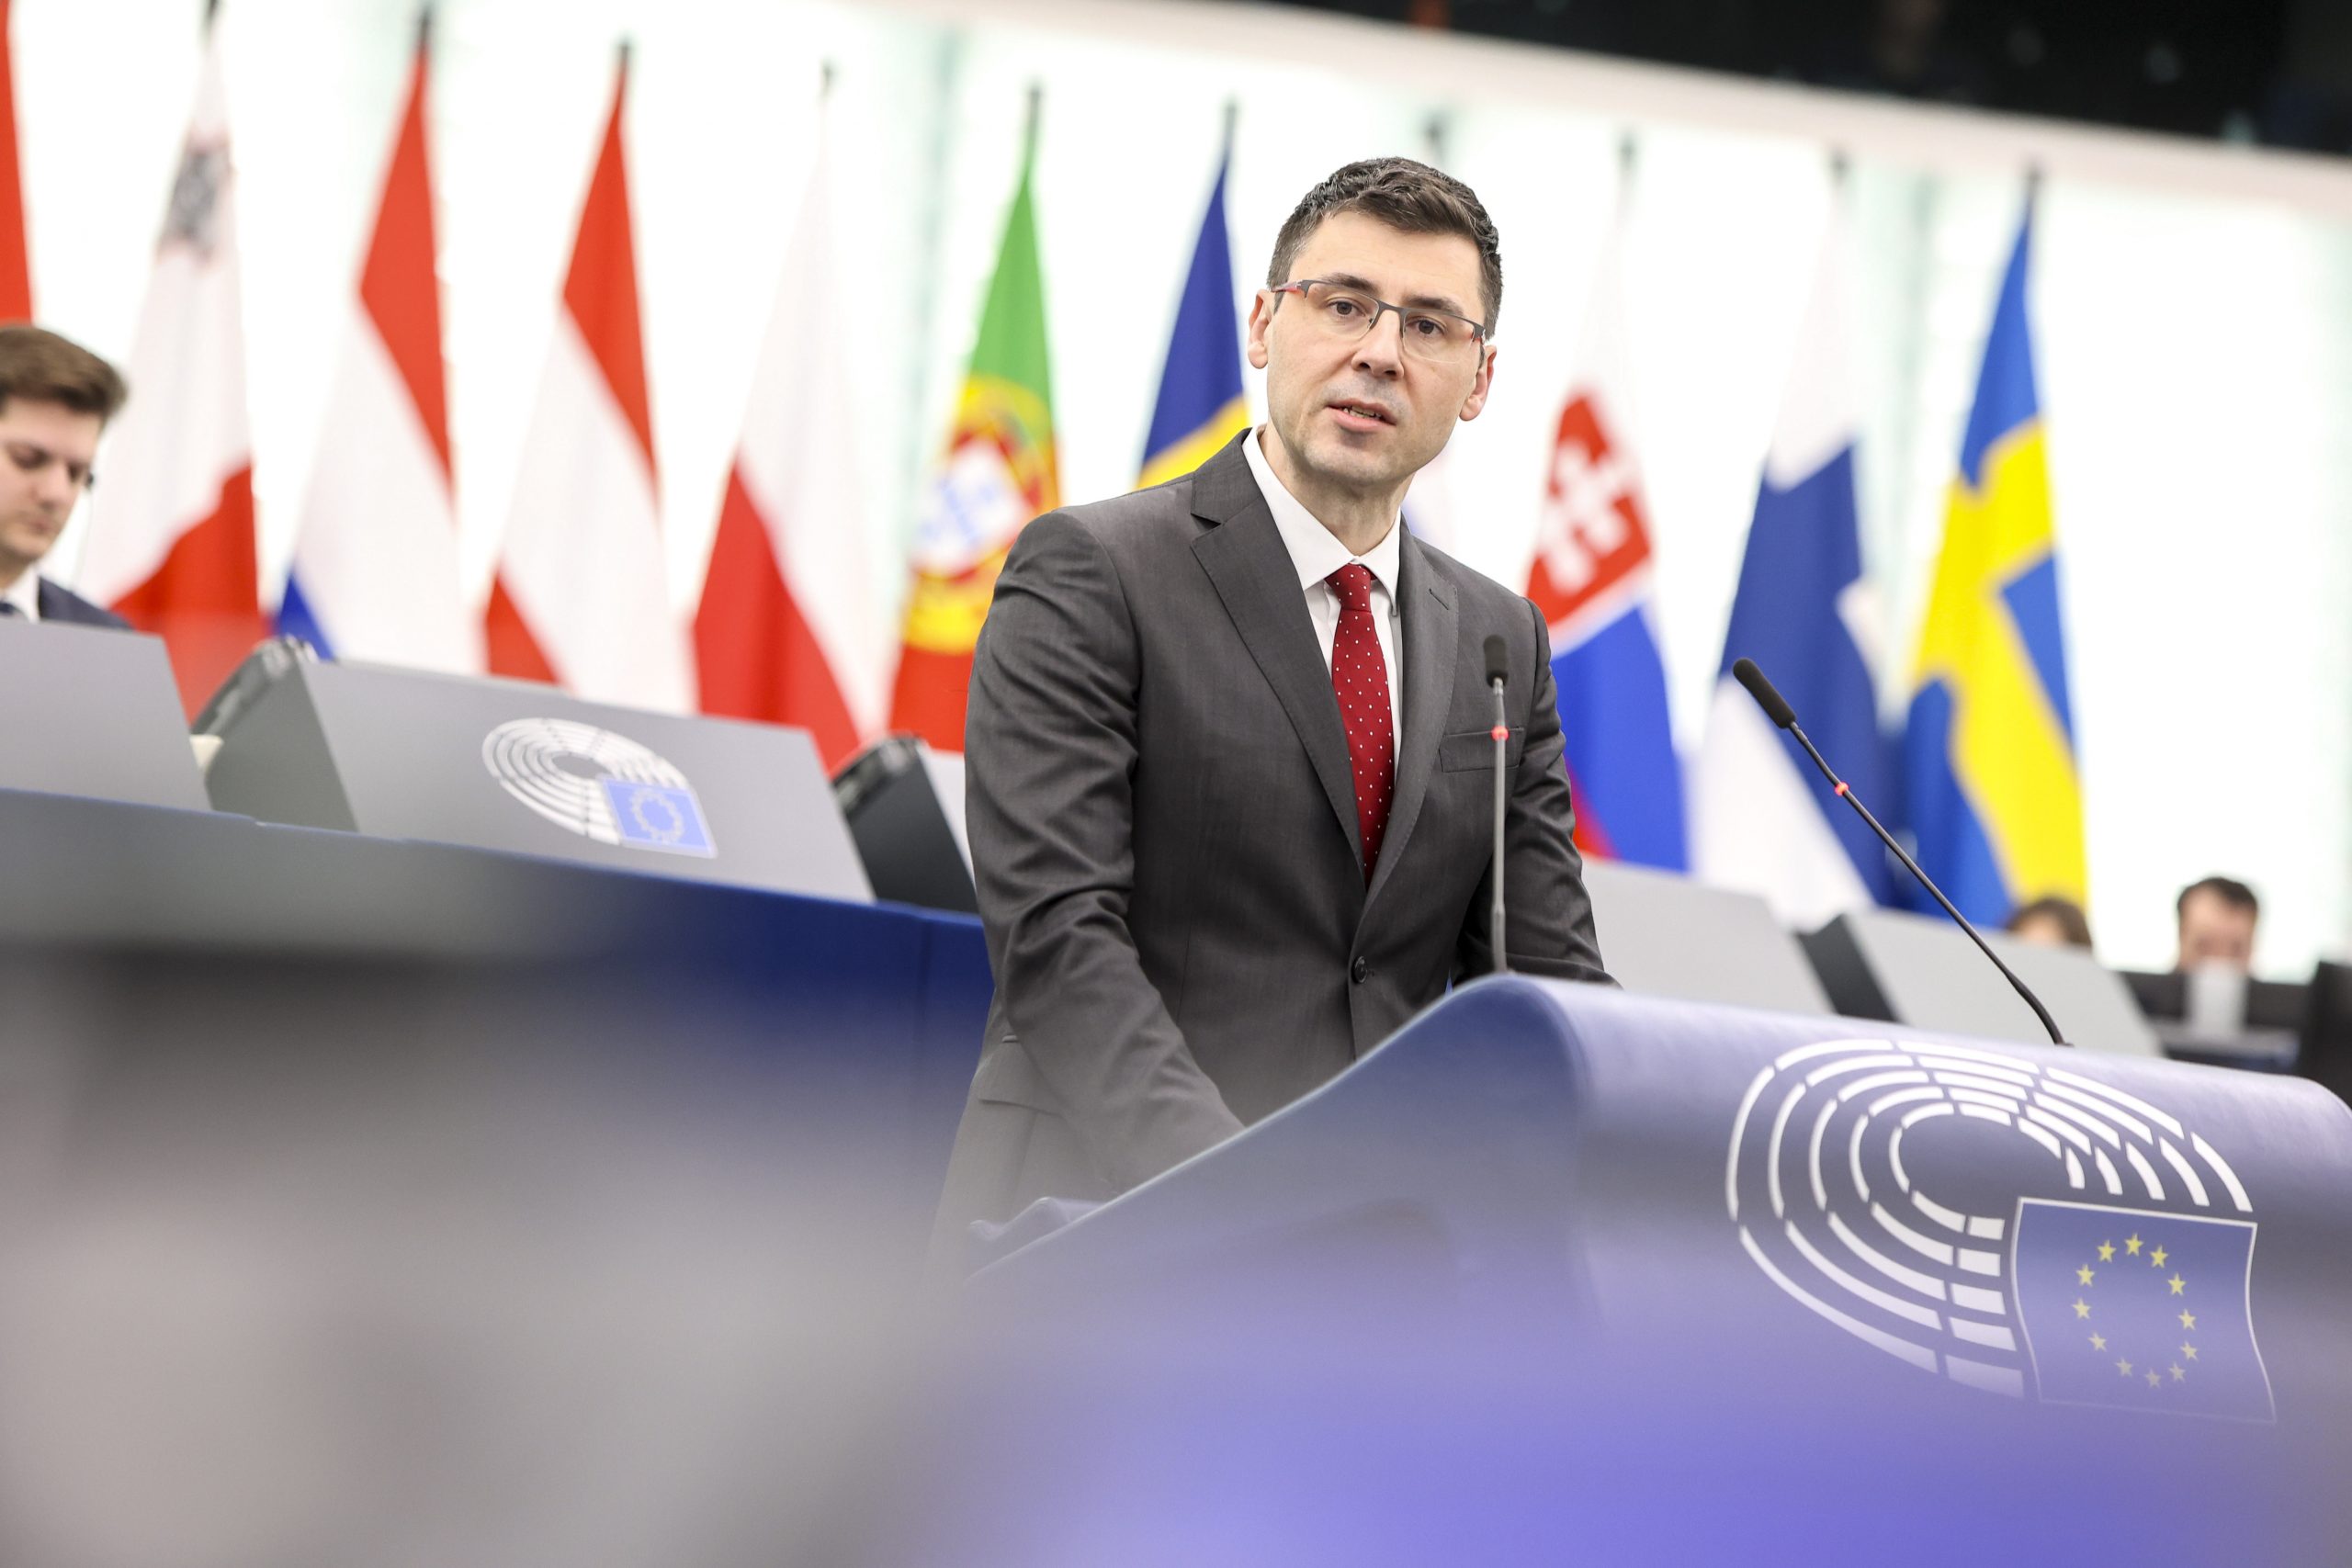 Fidesz MEP Warns of Risks of EU Joint Borrowing